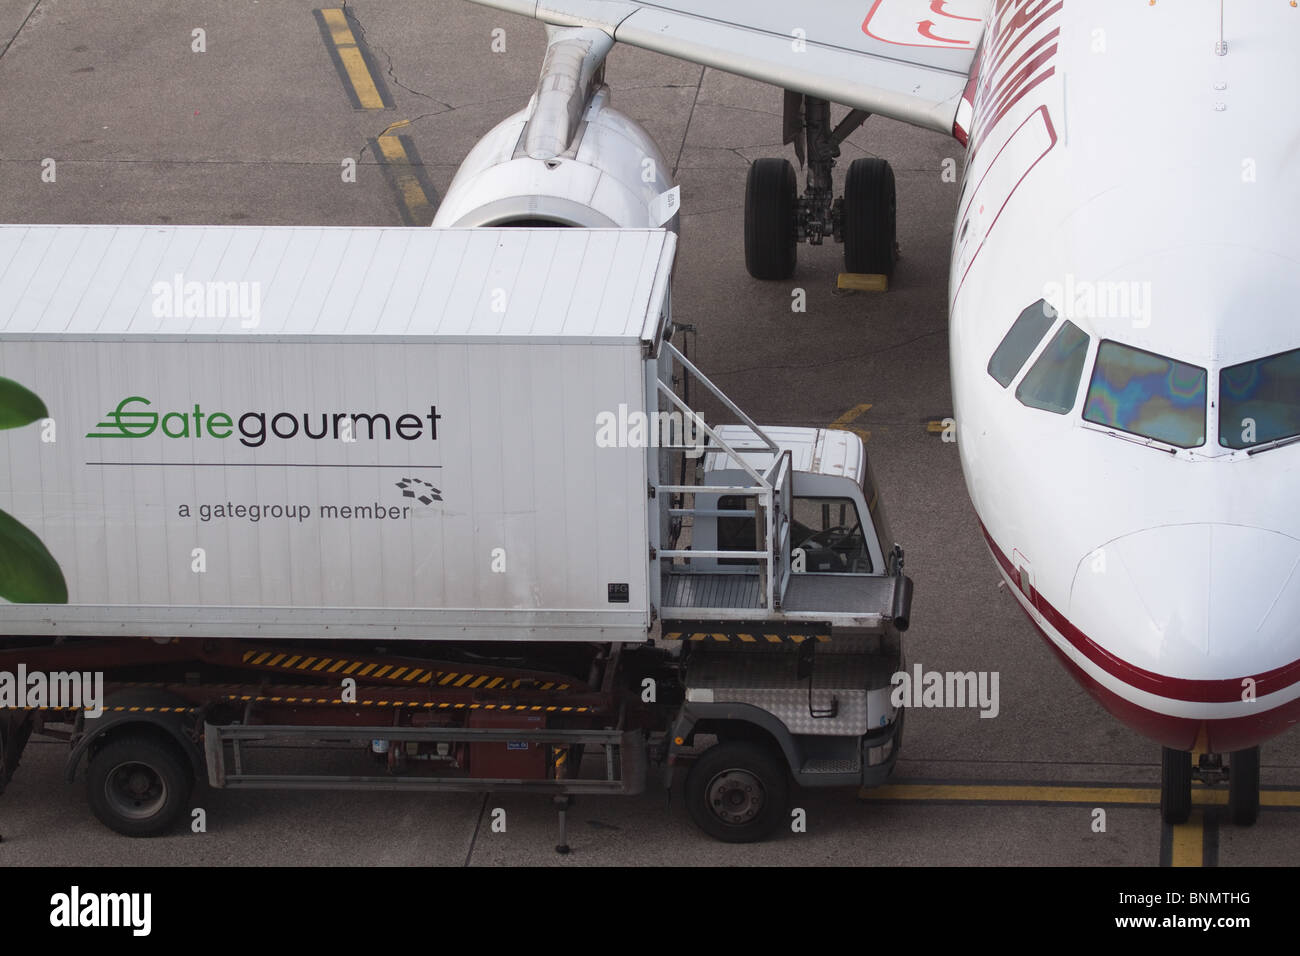 Aeroplane with Gate Gourmet lorry at Dusseldorf International Airport Stock Photo